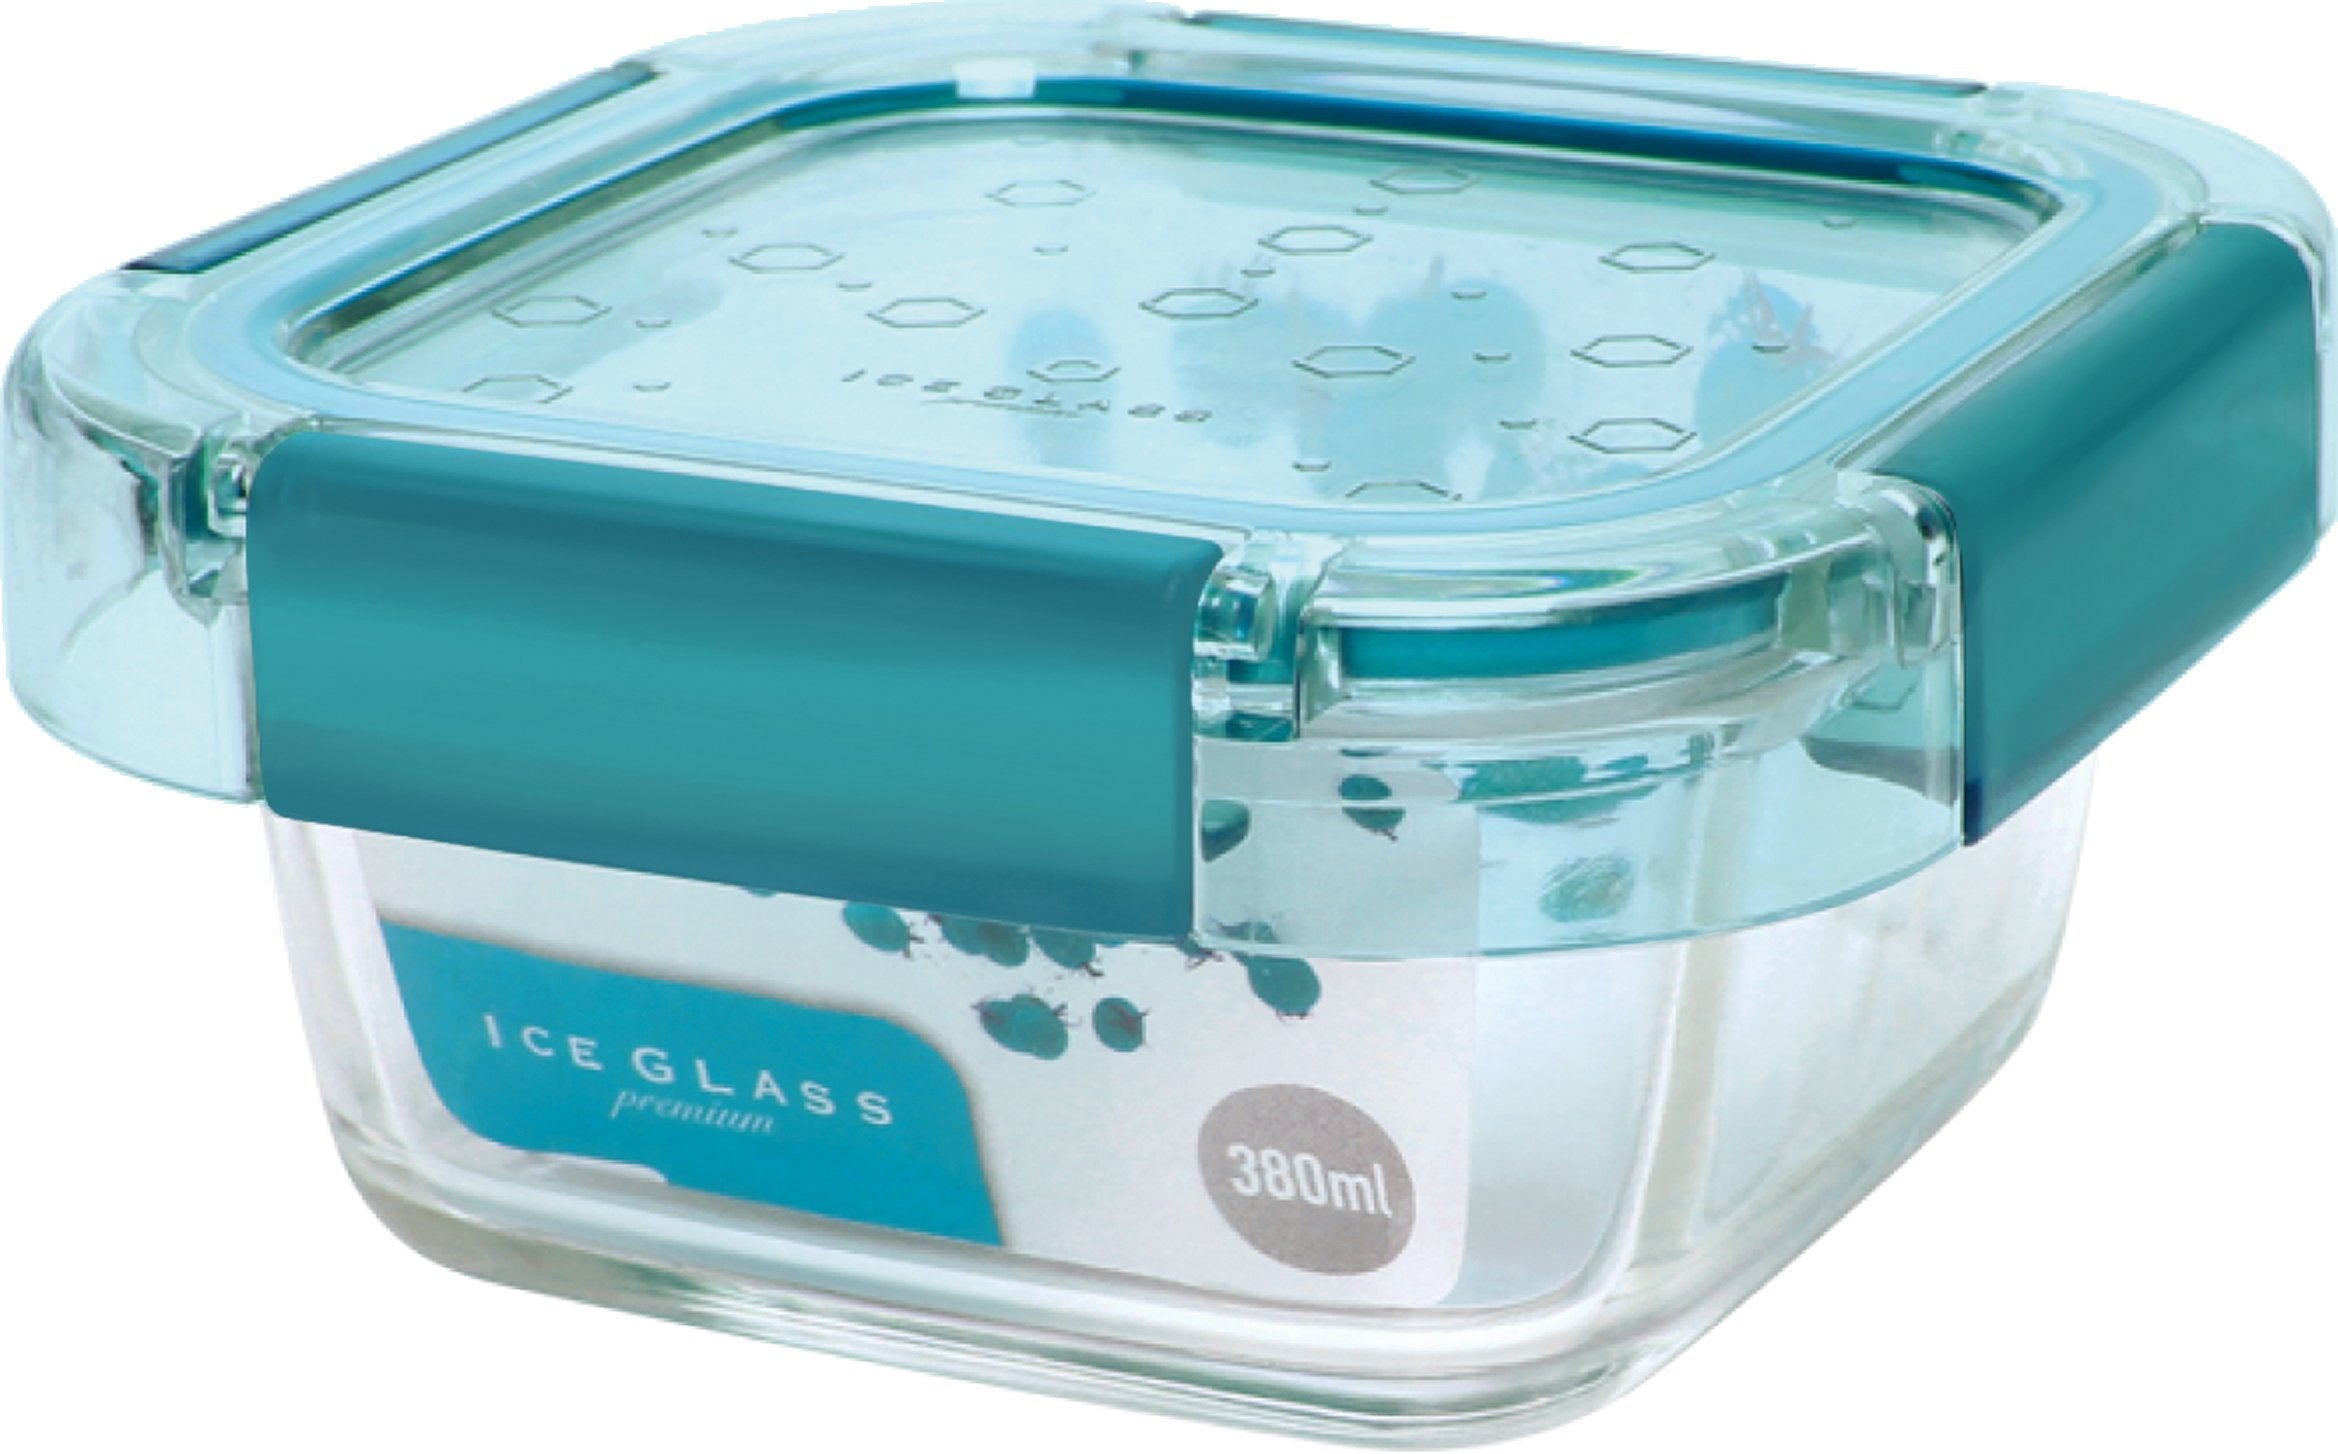 Komax Ice Glass Premium Square Food Storage Container, 380 ml (Mint)